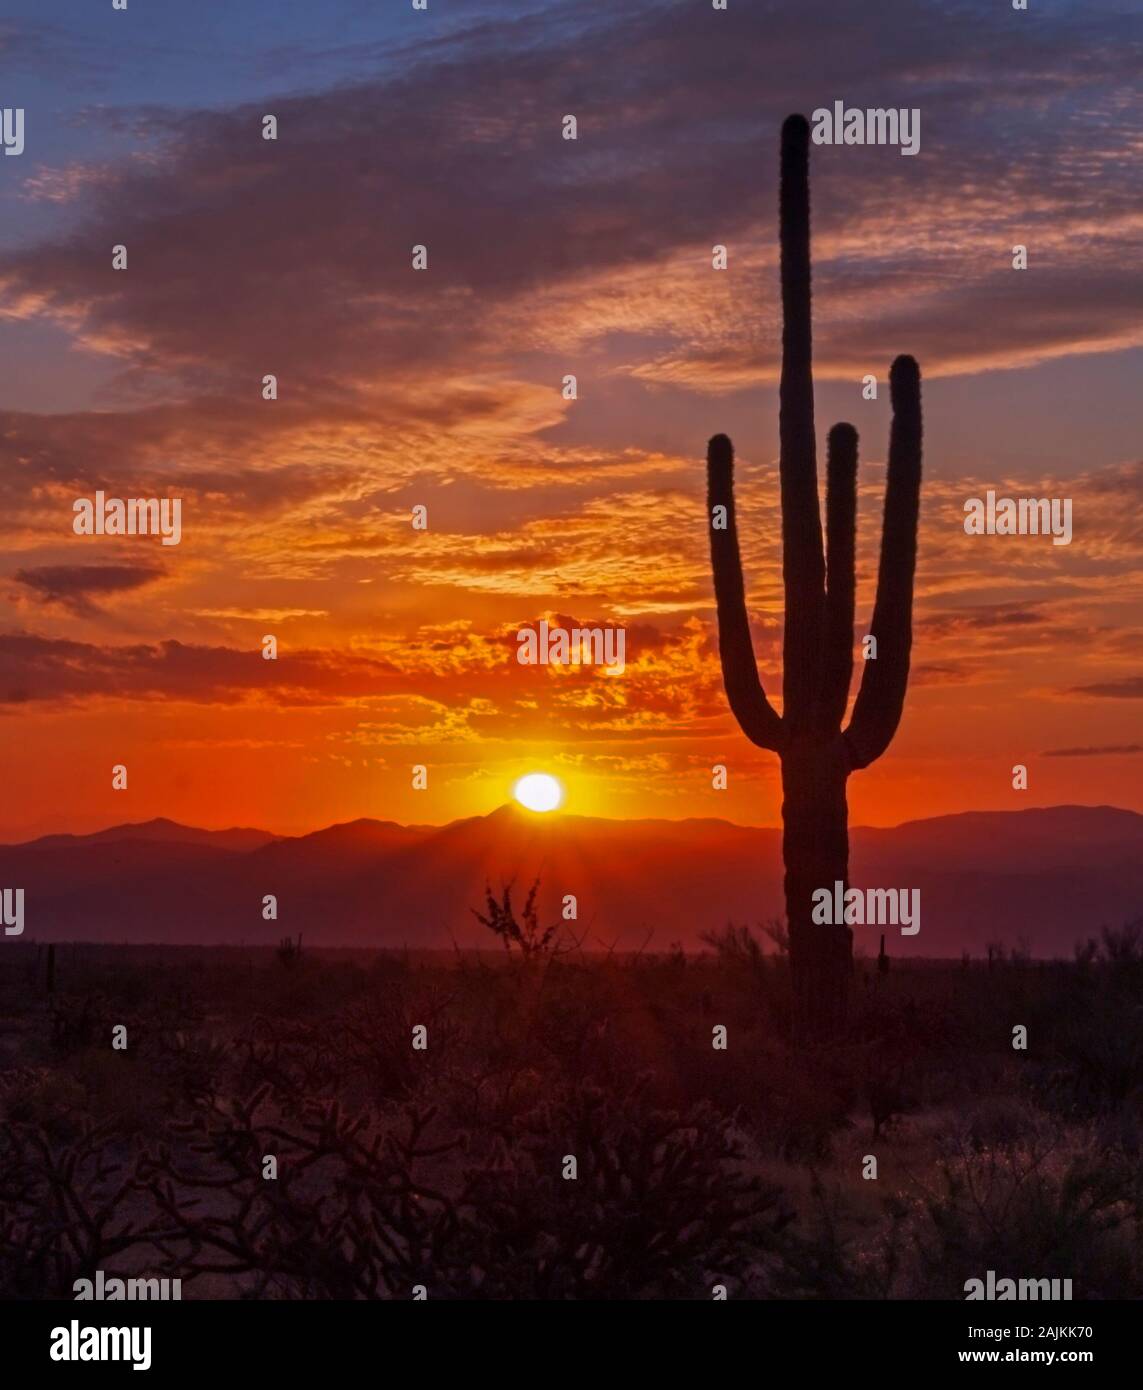 Lebendige AZ Sonnenaufgang mit lone Lone Saguaro Kaktus Silhouette und Sonnenstrahlen. Stockfoto